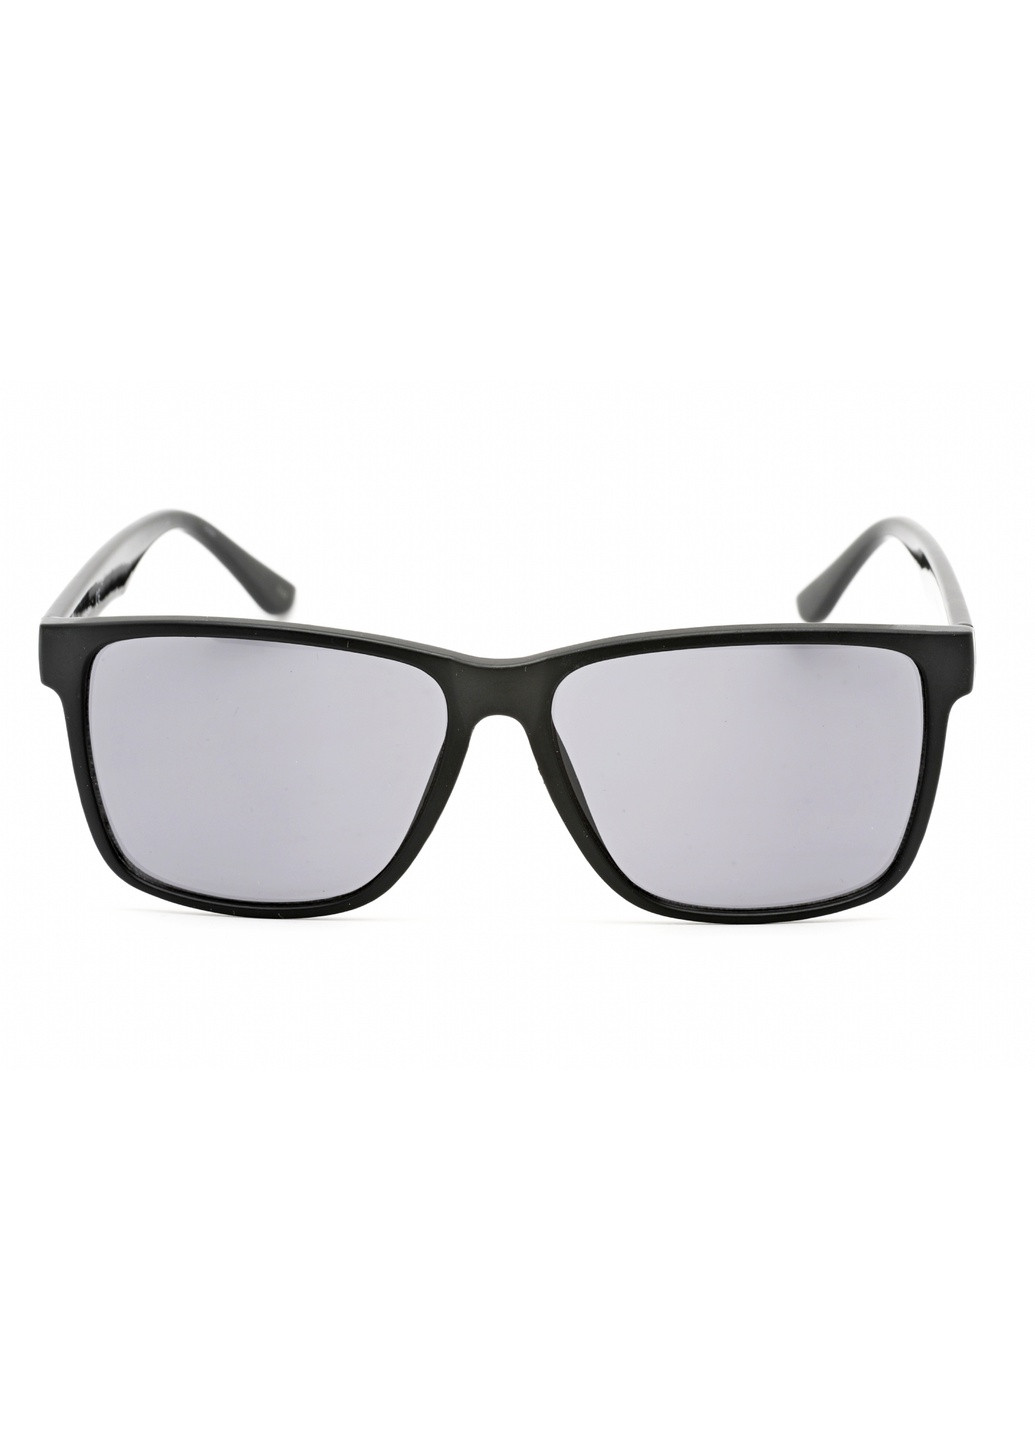 Сонцезахиснi окуляри Calvin Klein ck19540s 01 (259612703)